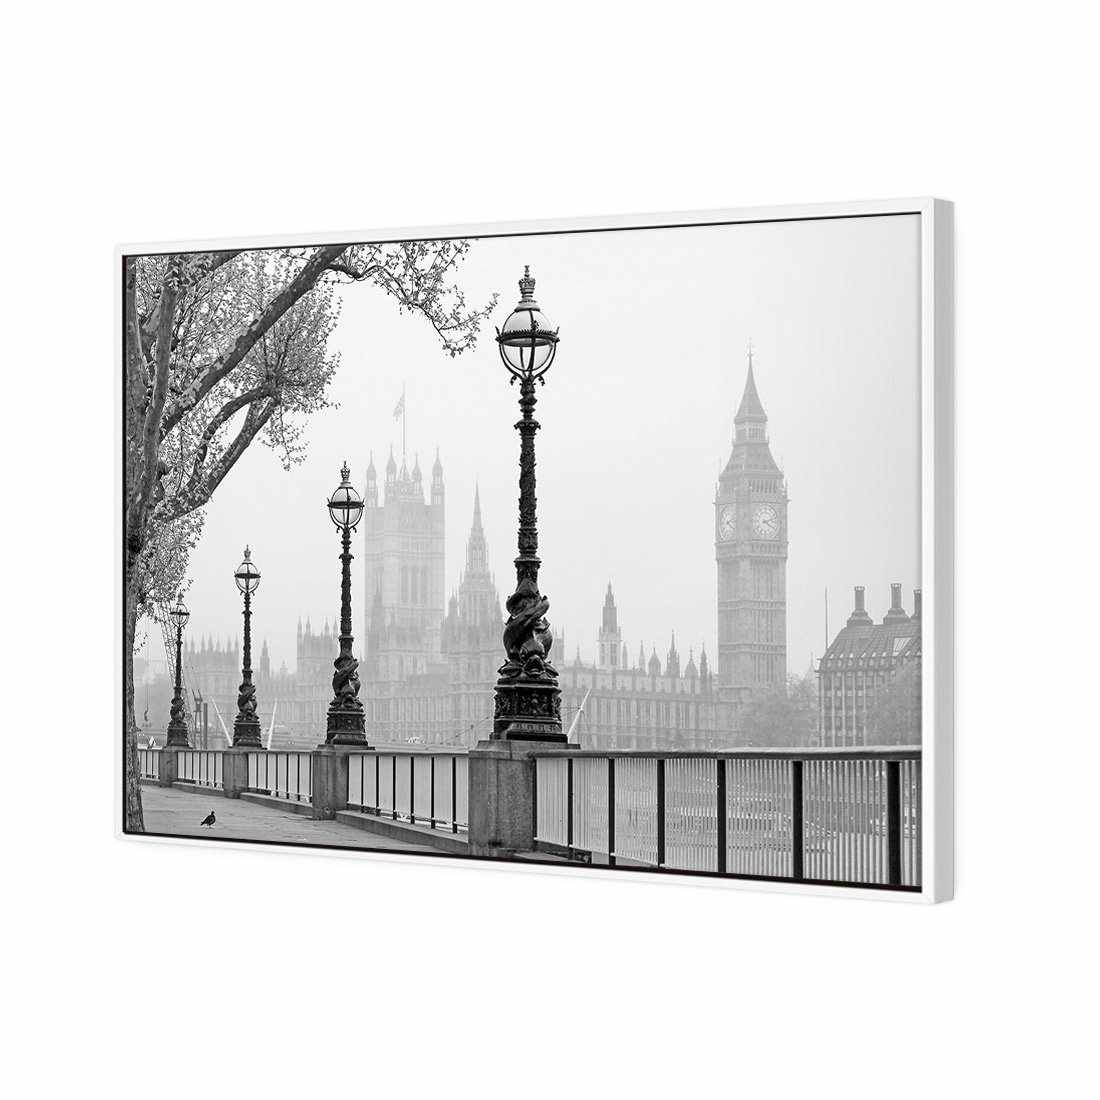 Misty London, B&W Canvas Art-Canvas-Wall Art Designs-45x30cm-Canvas - White Frame-Wall Art Designs